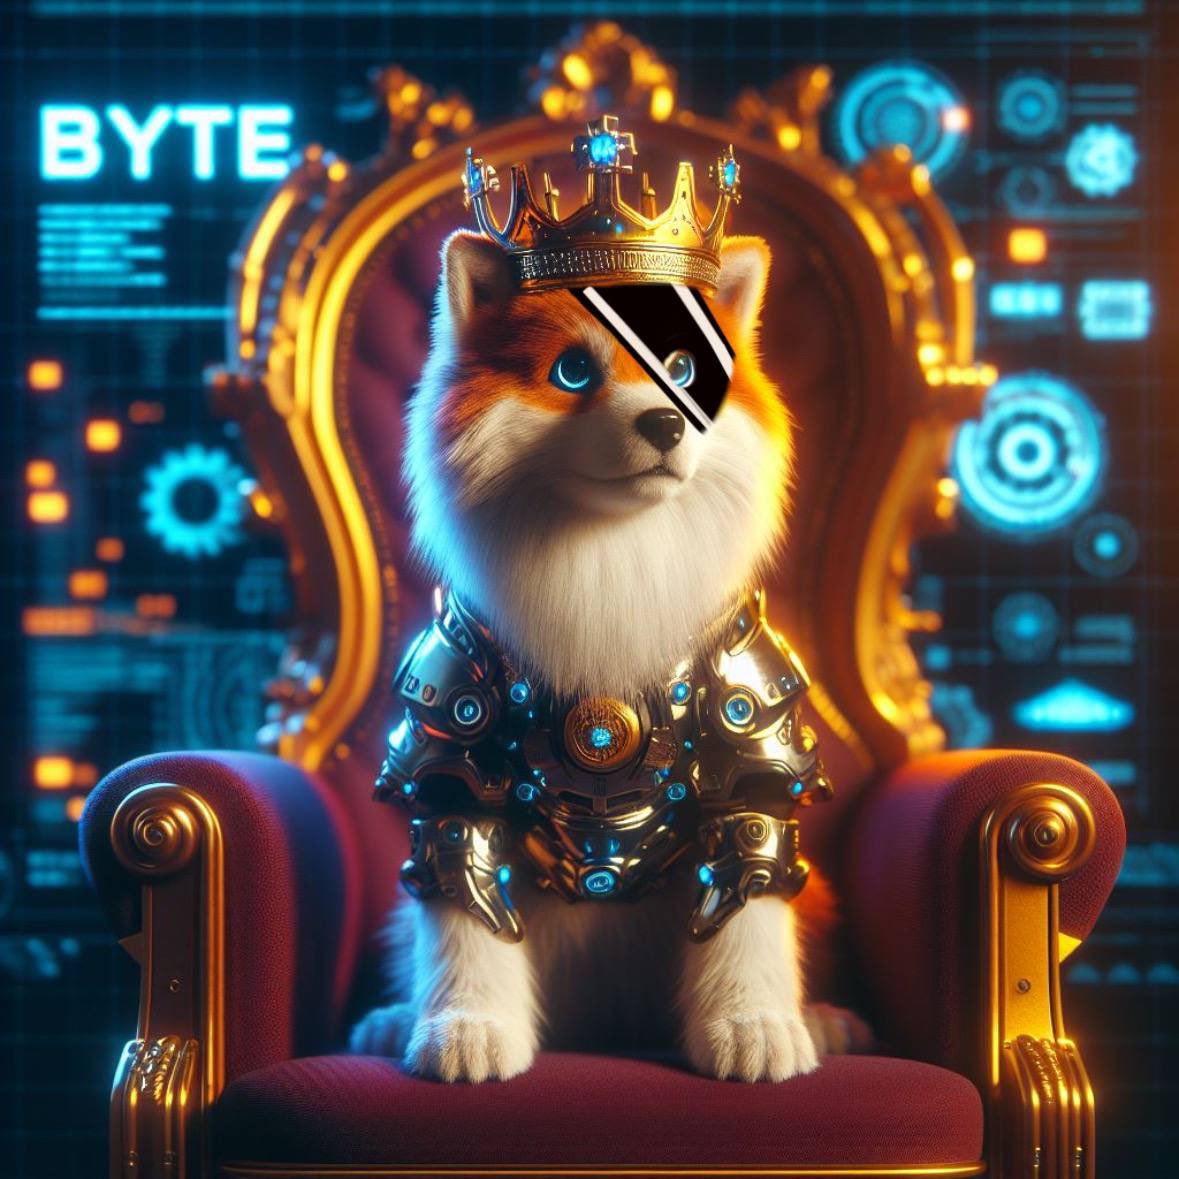 BYTE will be the King of Memes. 

#AI + #Elon_Musk + #DOGEMEME = 🚀🔥

@Byte_Erc20